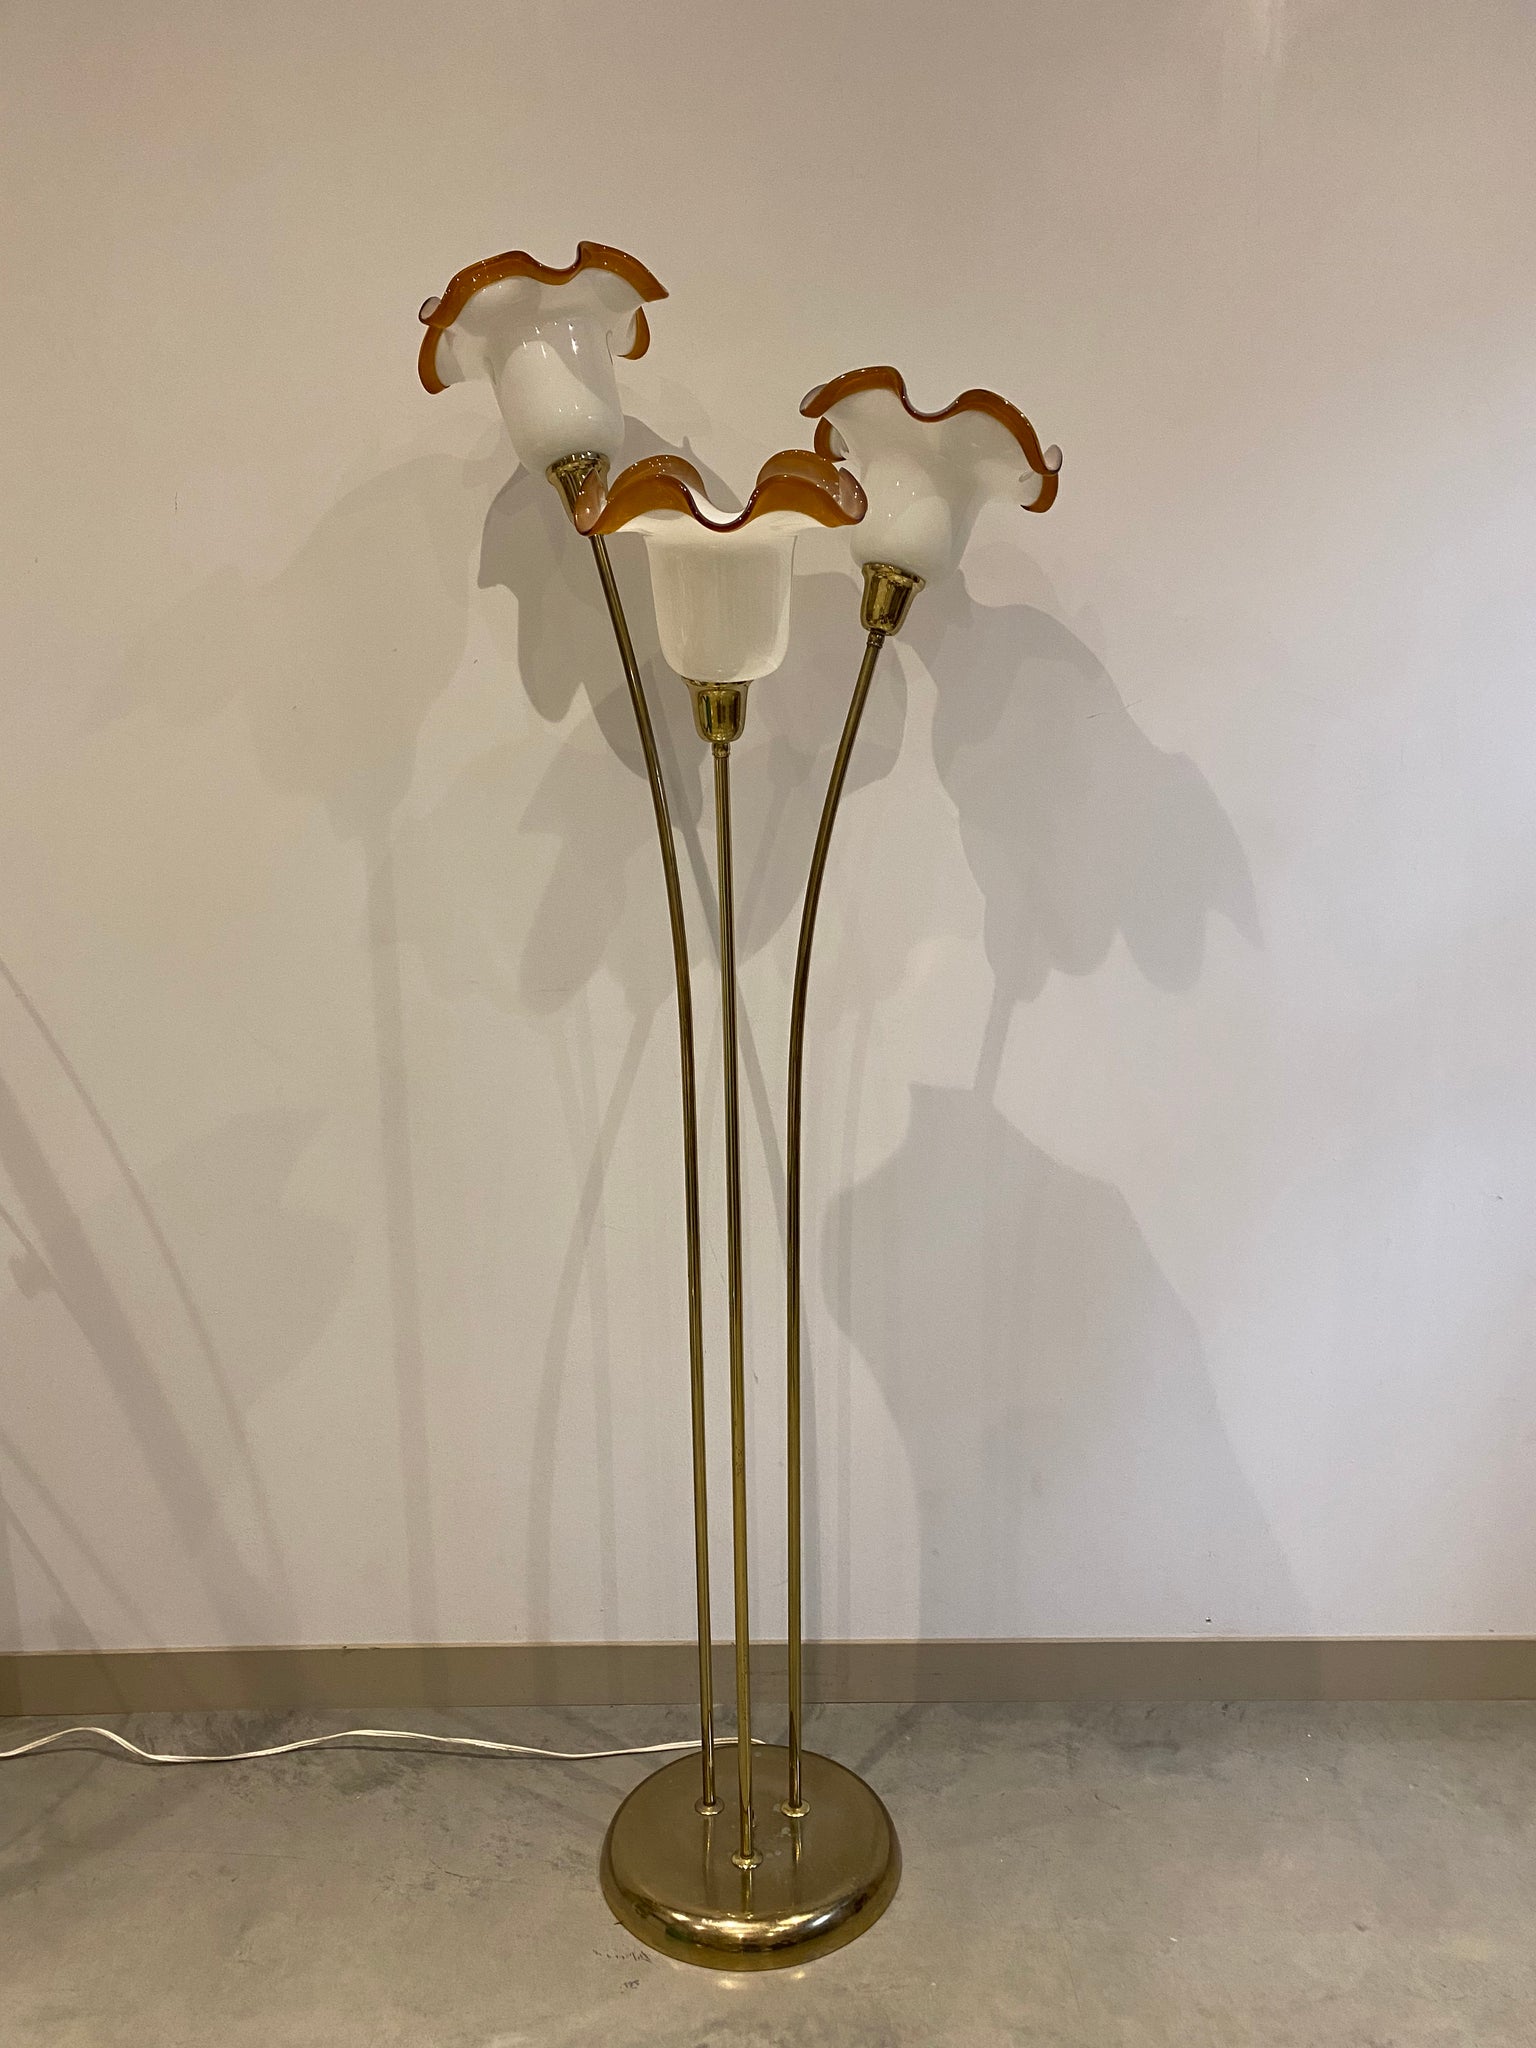 Murano glass style flowers & golden brass floor lamp